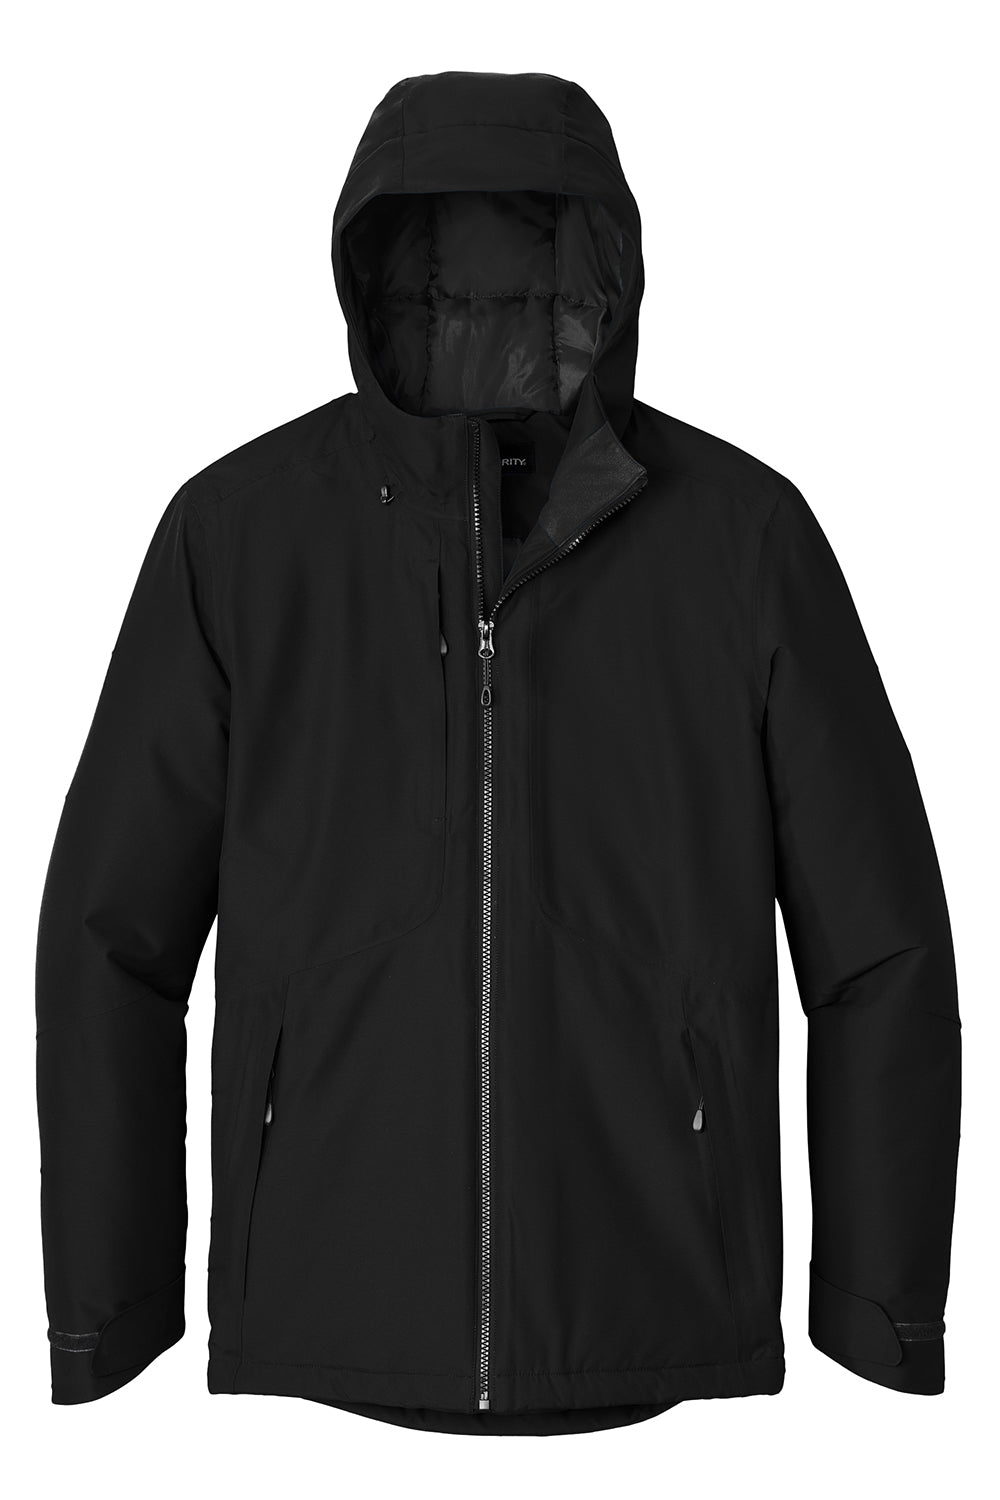 Port Authority J362 Mens Venture Waterproof Insulated Full Zip Hooded Jacket Deep Black Flat Front